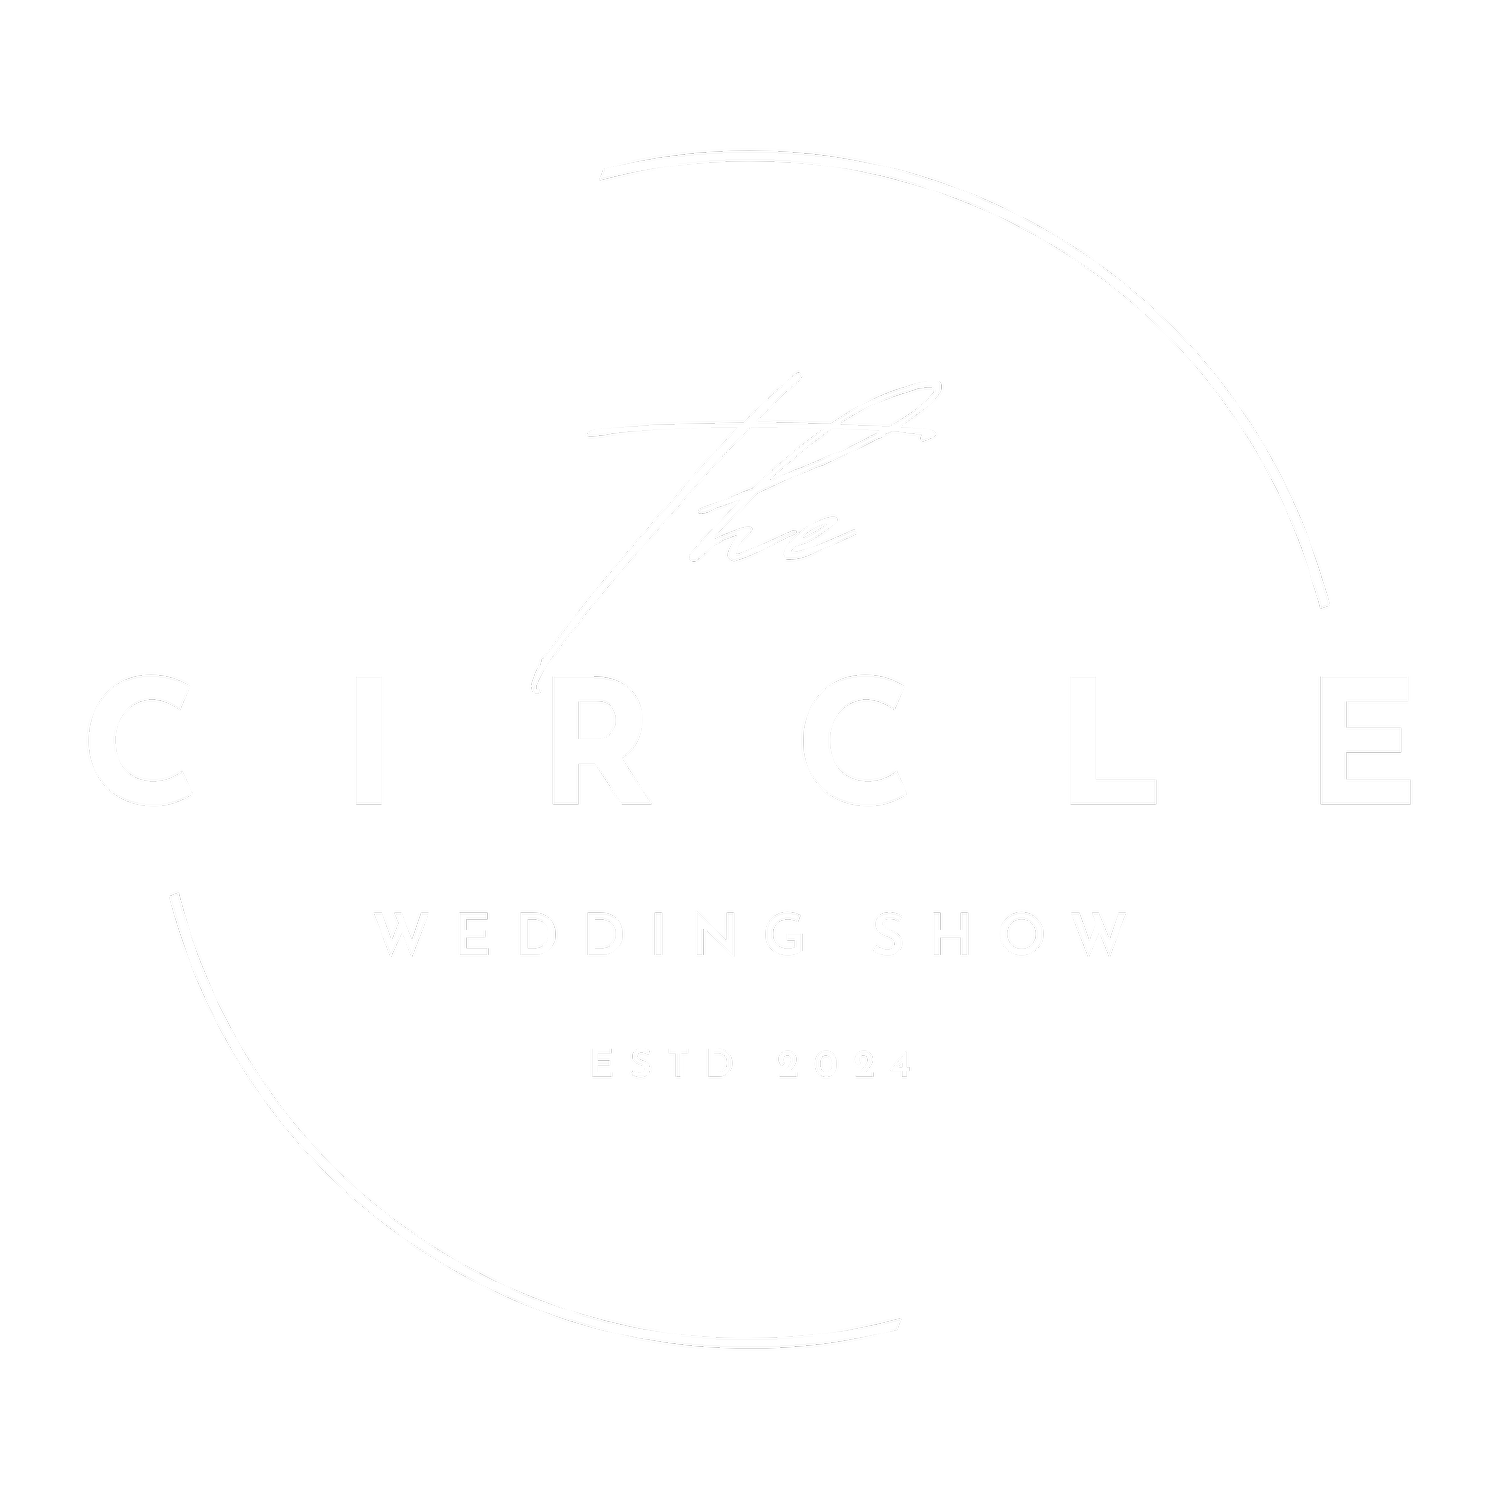 The Circle Wedding Show